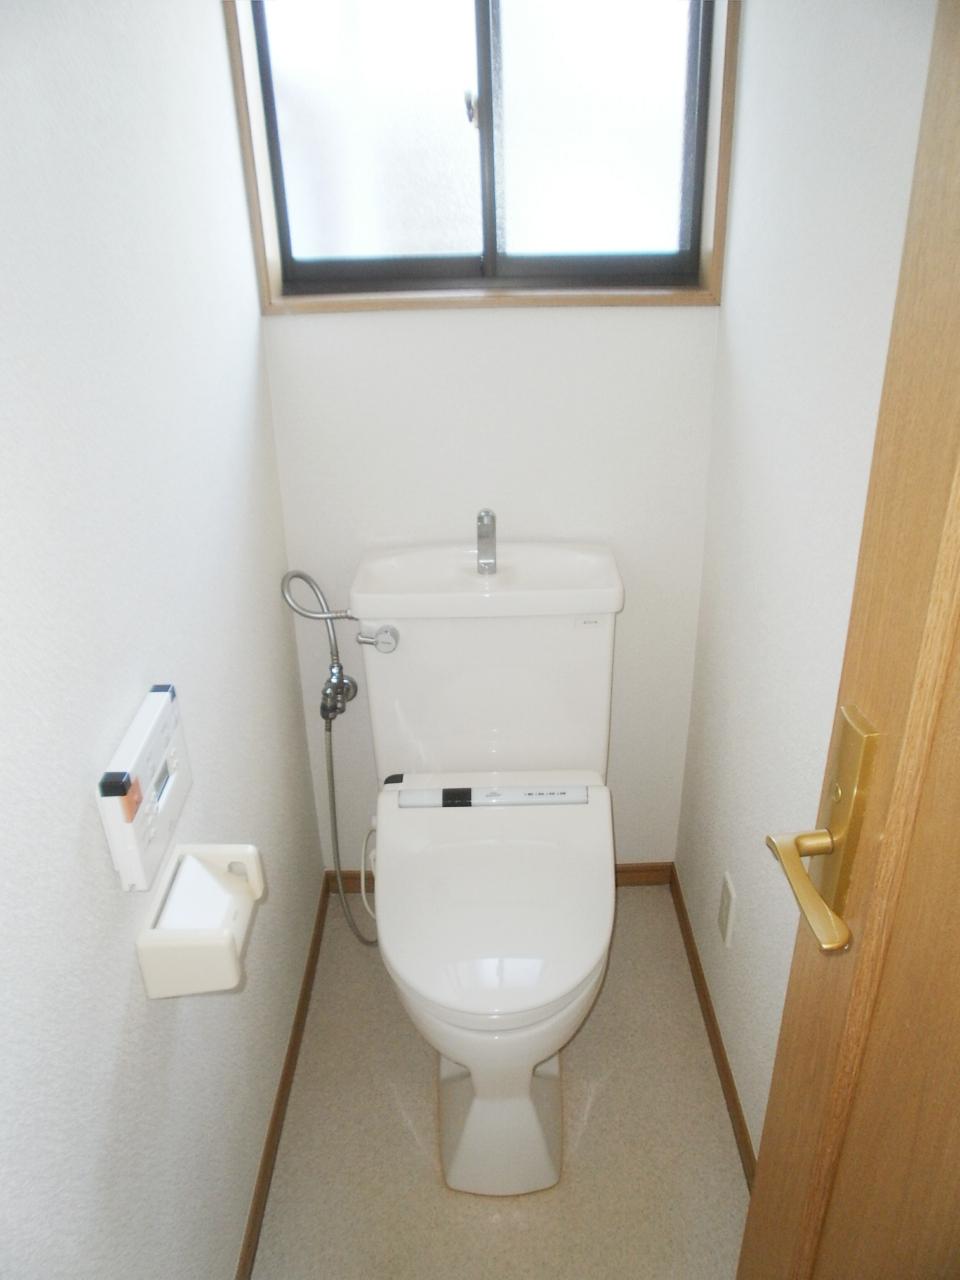 Toilet. First floor toilet (April 23, 2013) Shooting